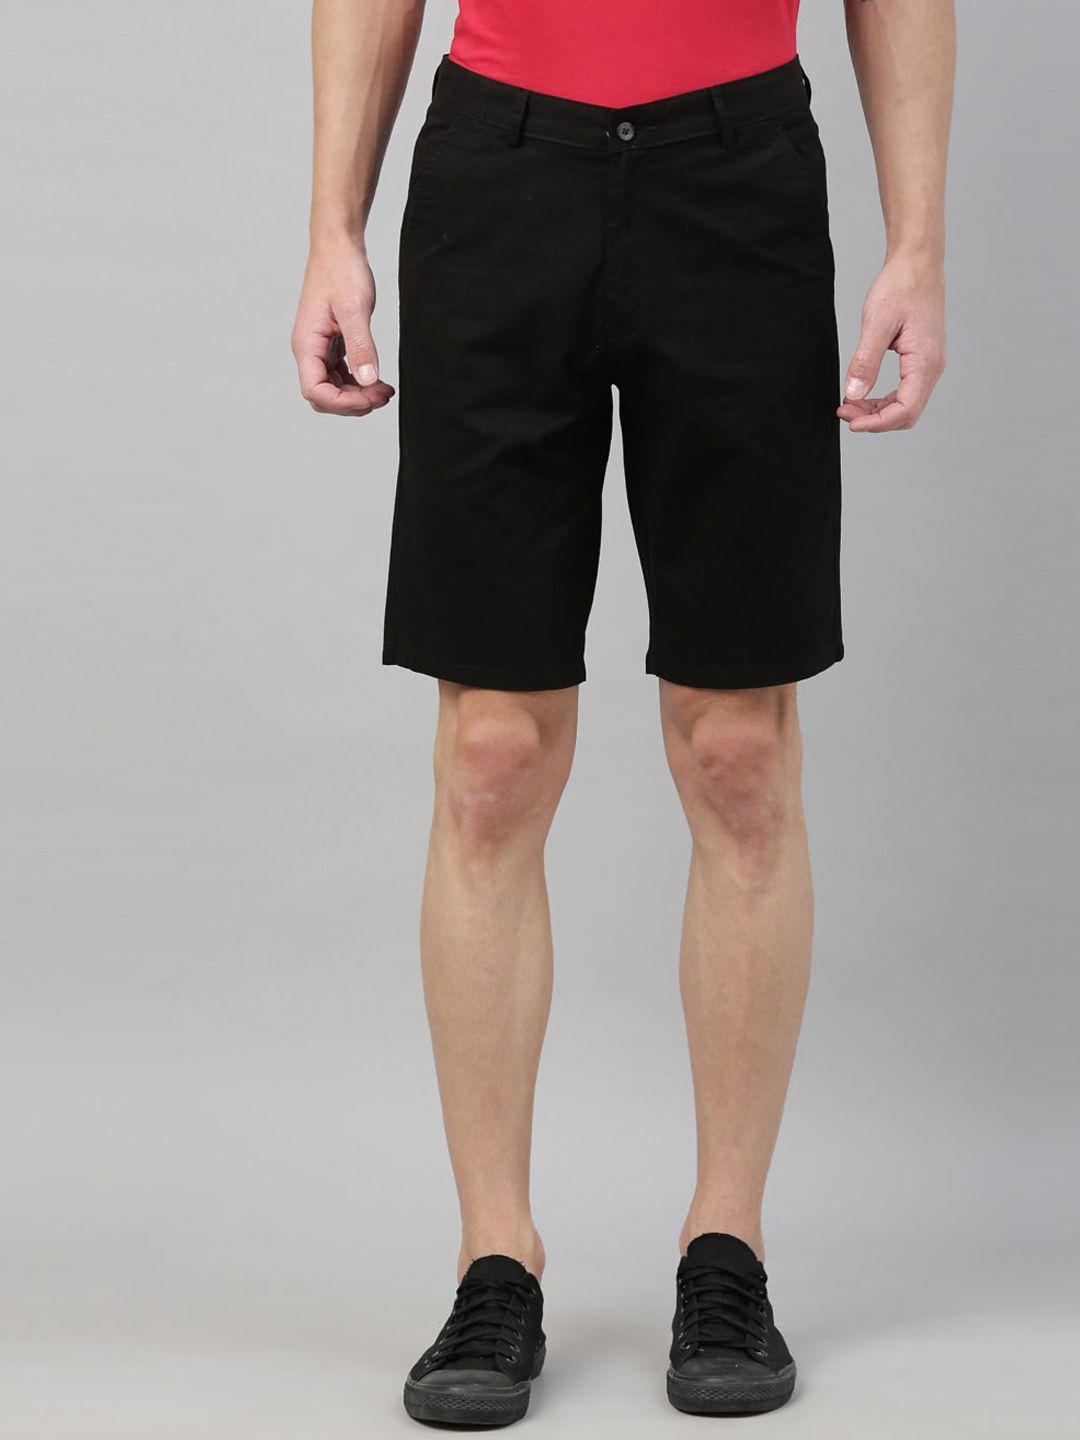 bushirt men black solid regular fit chino shorts